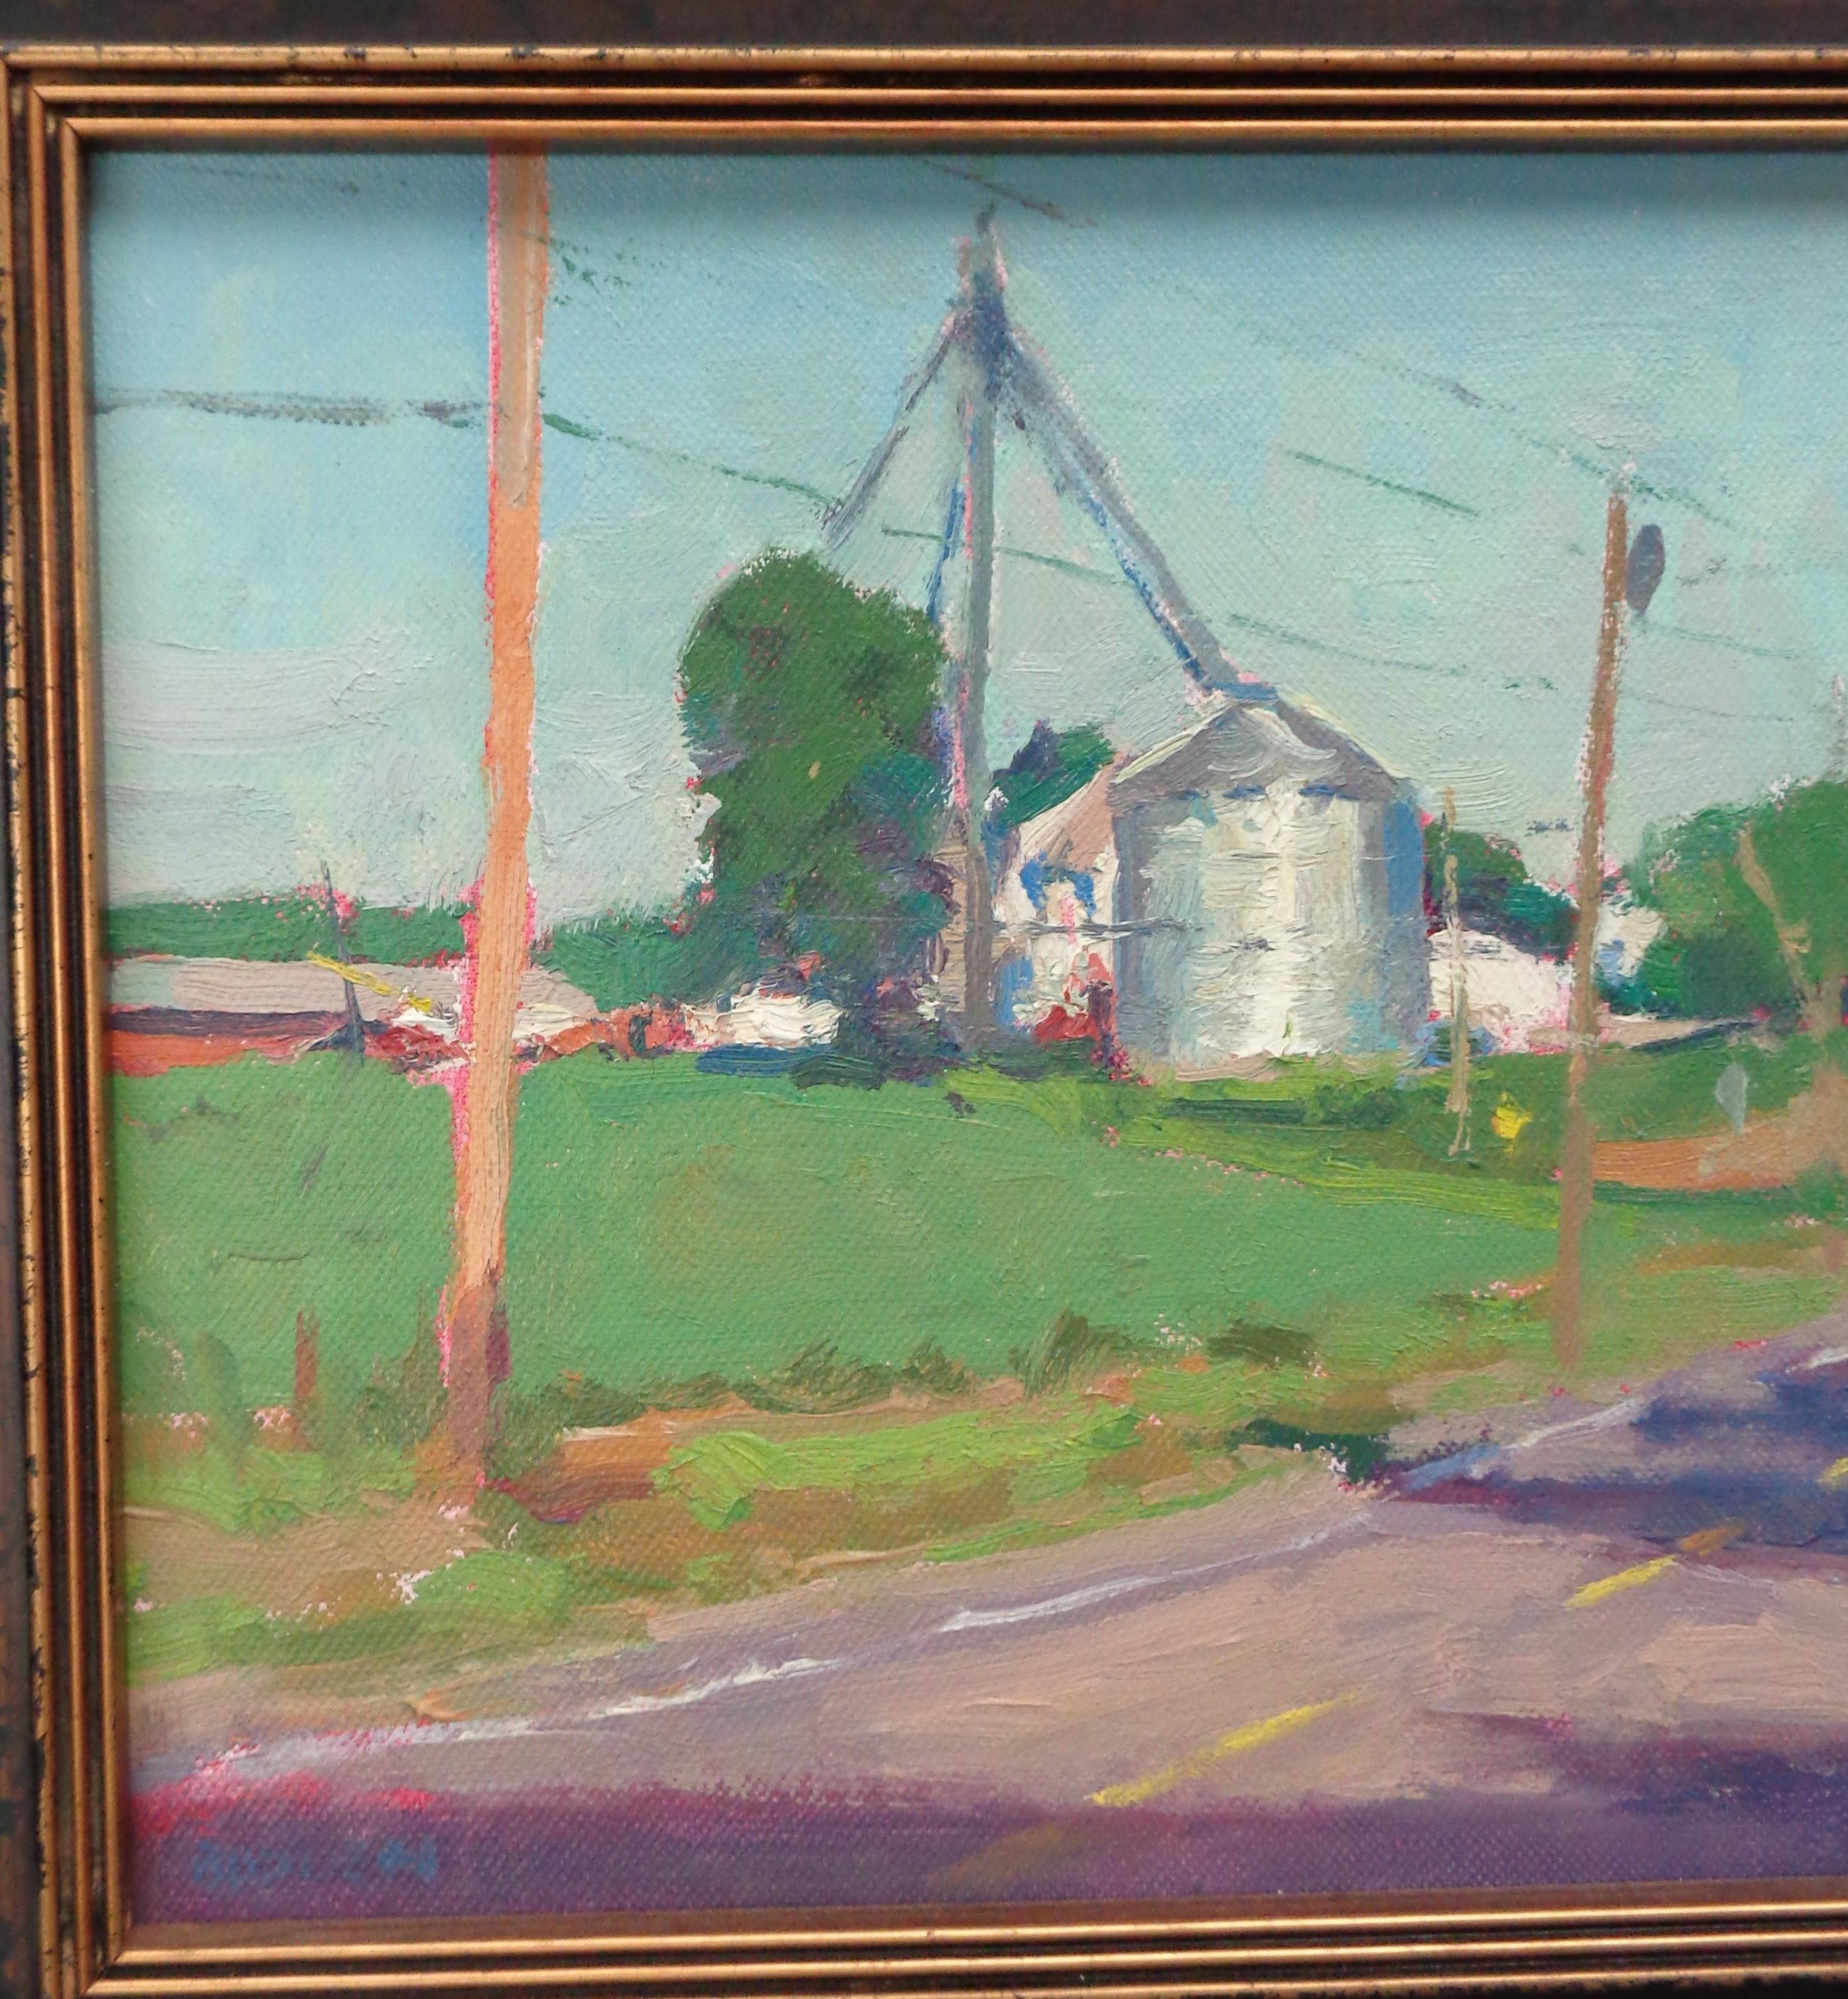  Impressionistic Rural Farm Landscape Oil Painting Michael Budden Morning Light For Sale 1